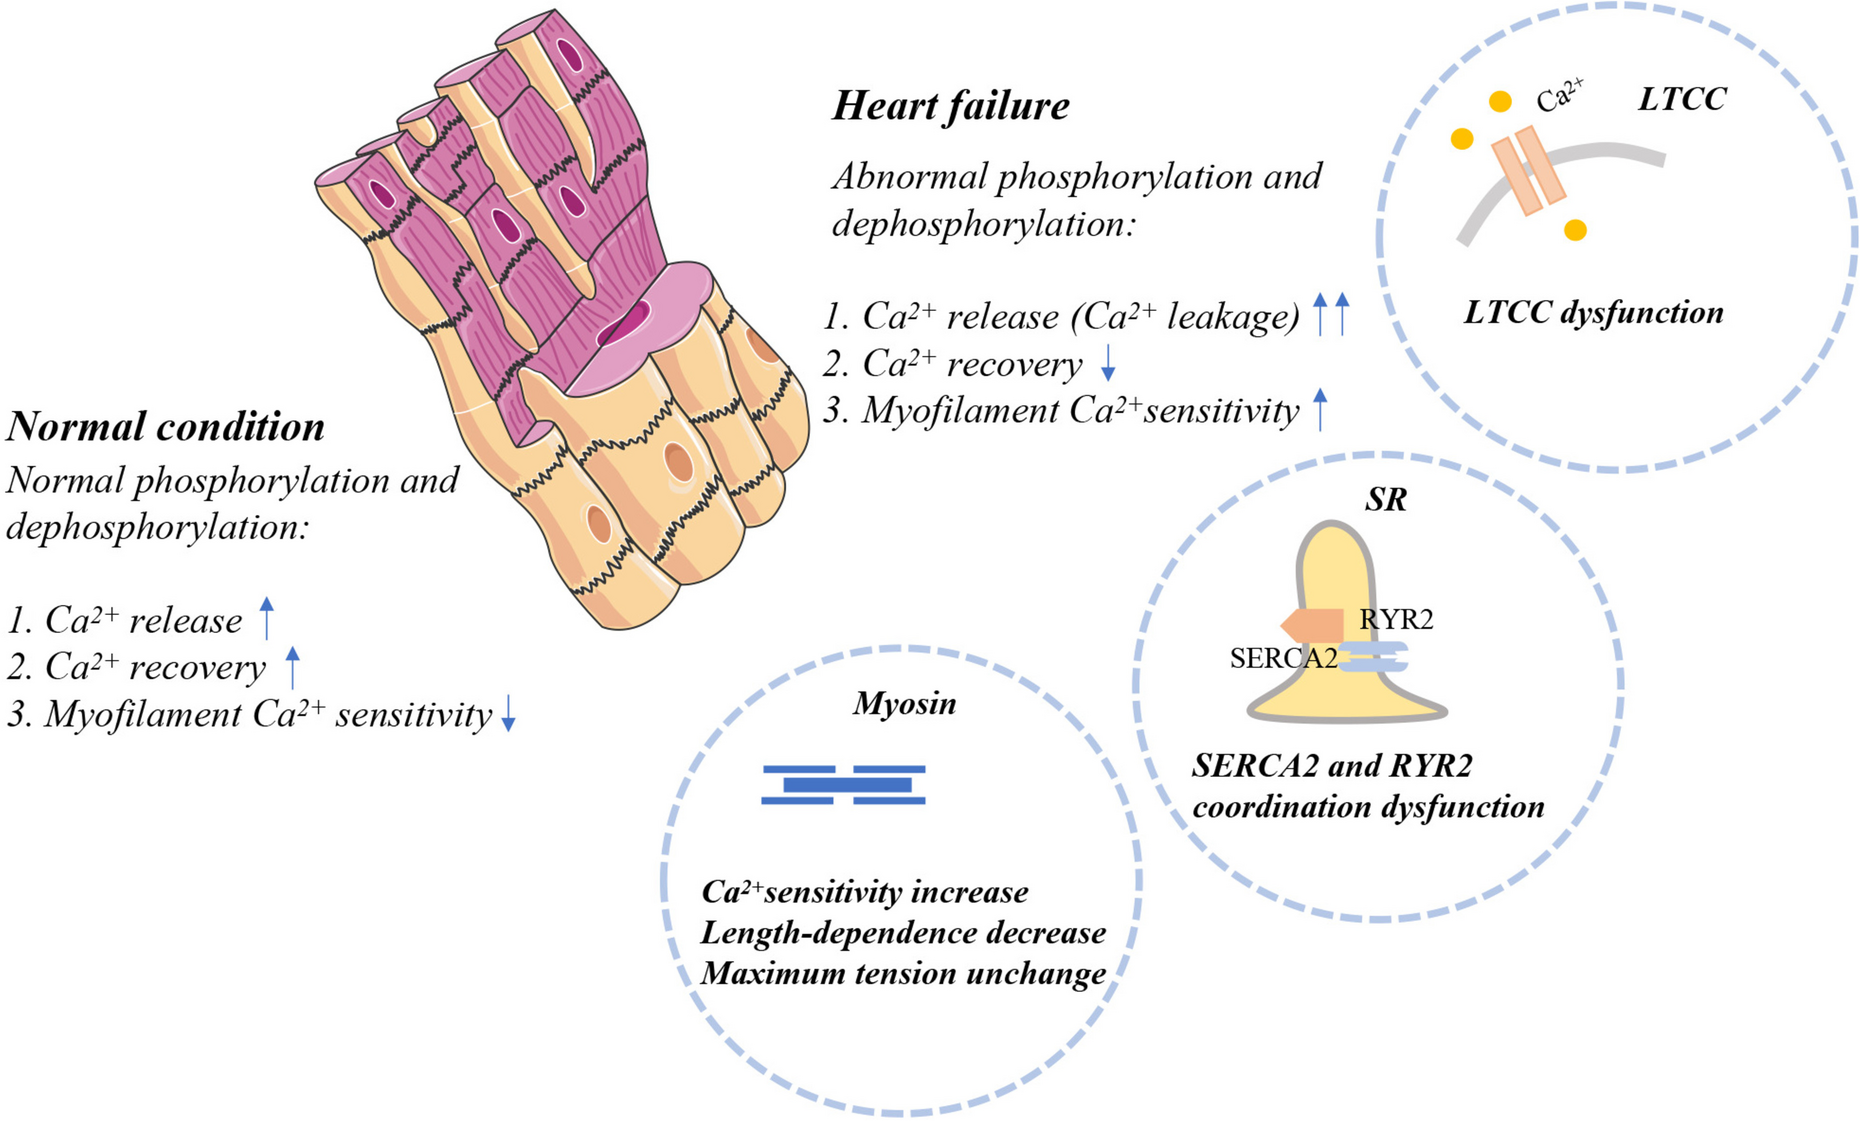 Abnormal phosphorylation / dephosphorylation and Ca2+ dysfunction in heart failure